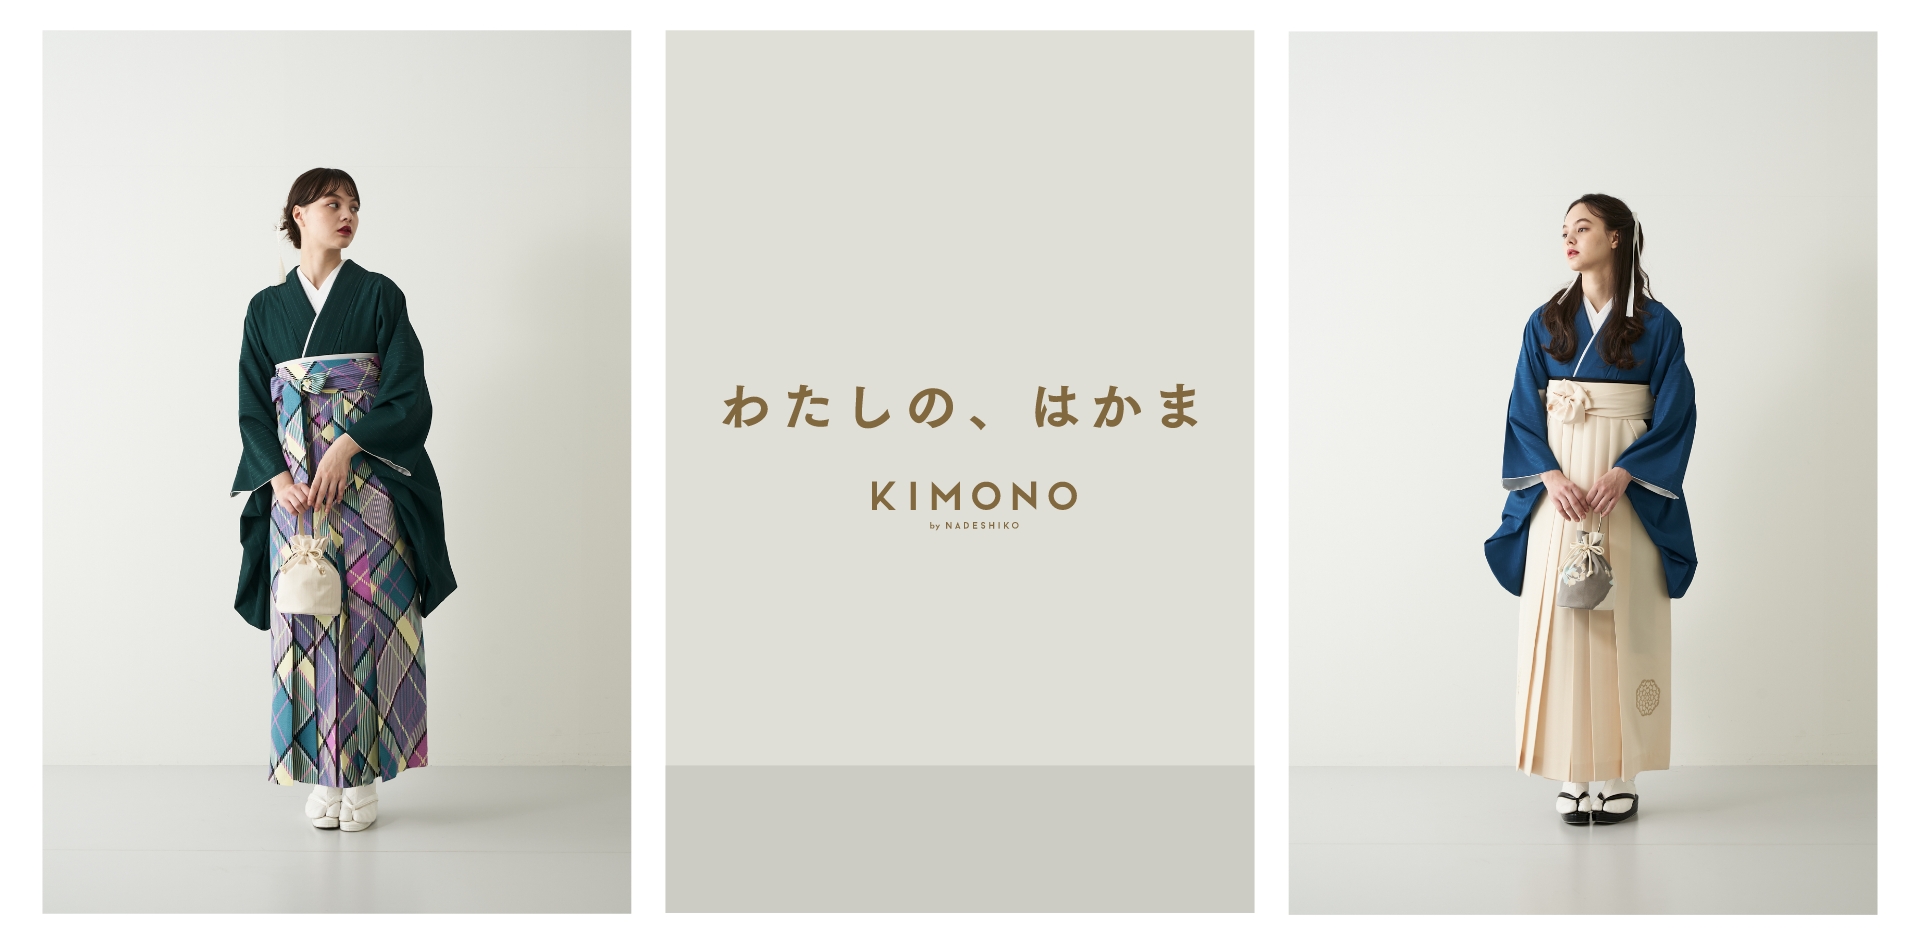 KIMONO by NADESHIKO わたしの、はかま